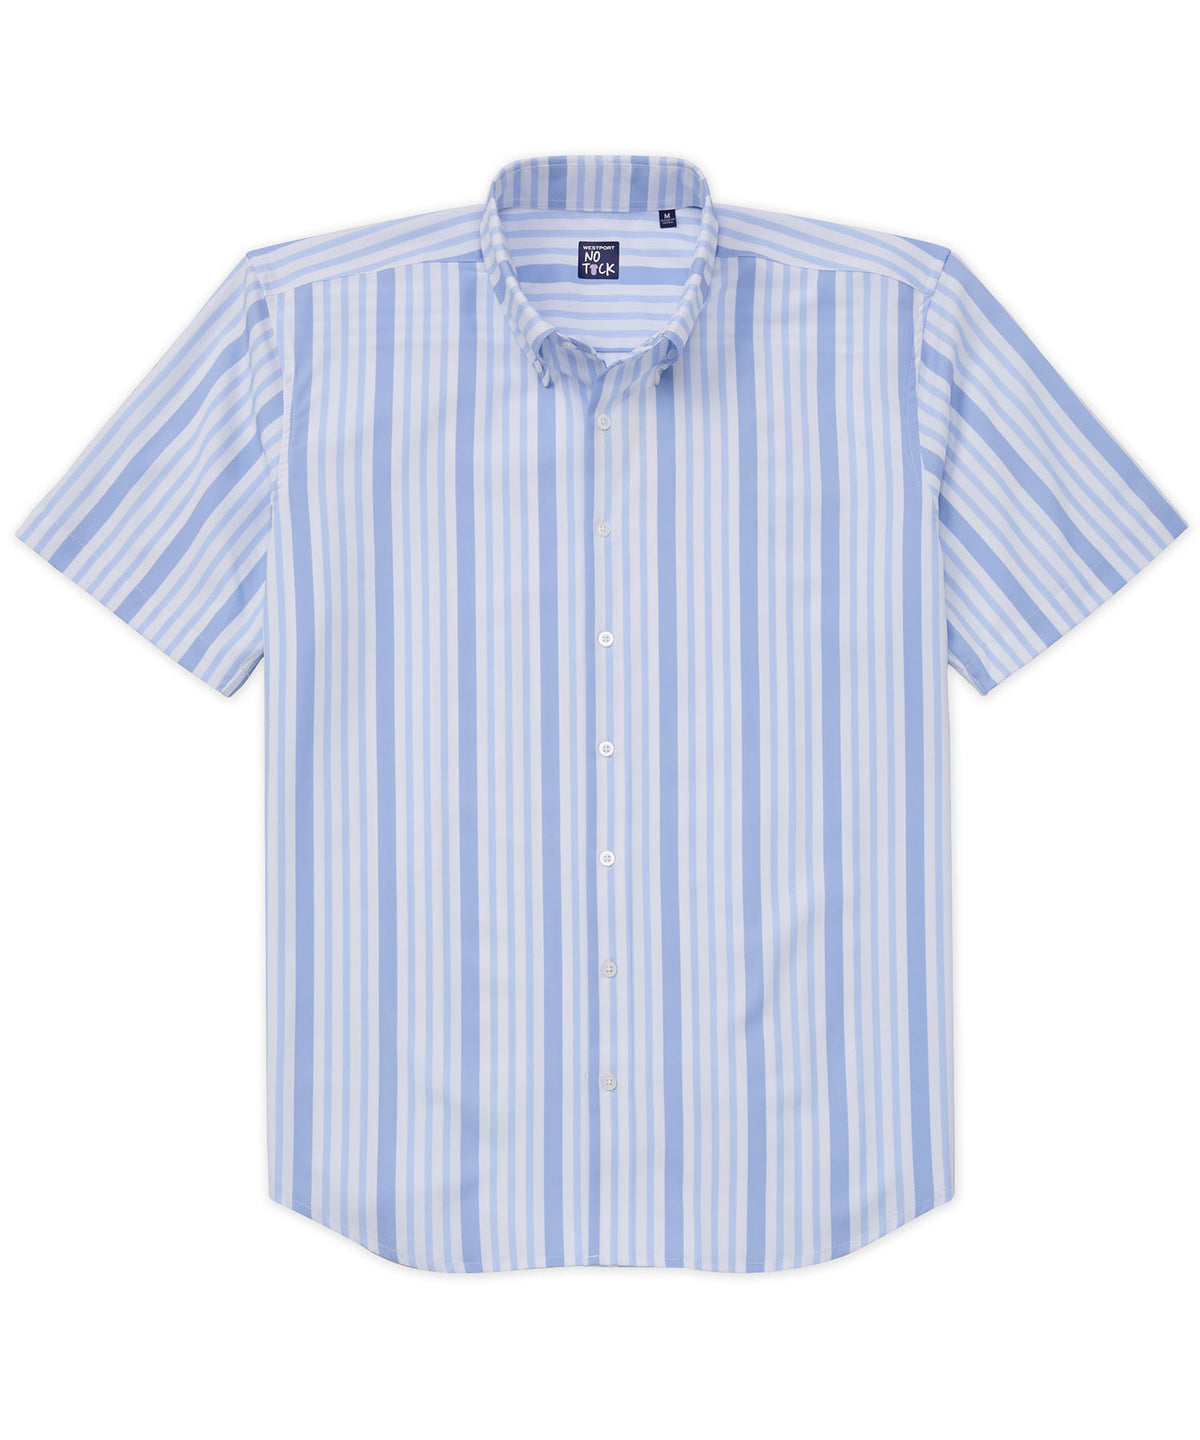 Westport No-Tuck Short Sleeve 'Thick & Thin' Multi Stripe Print Sport Shirt, Big & Tall